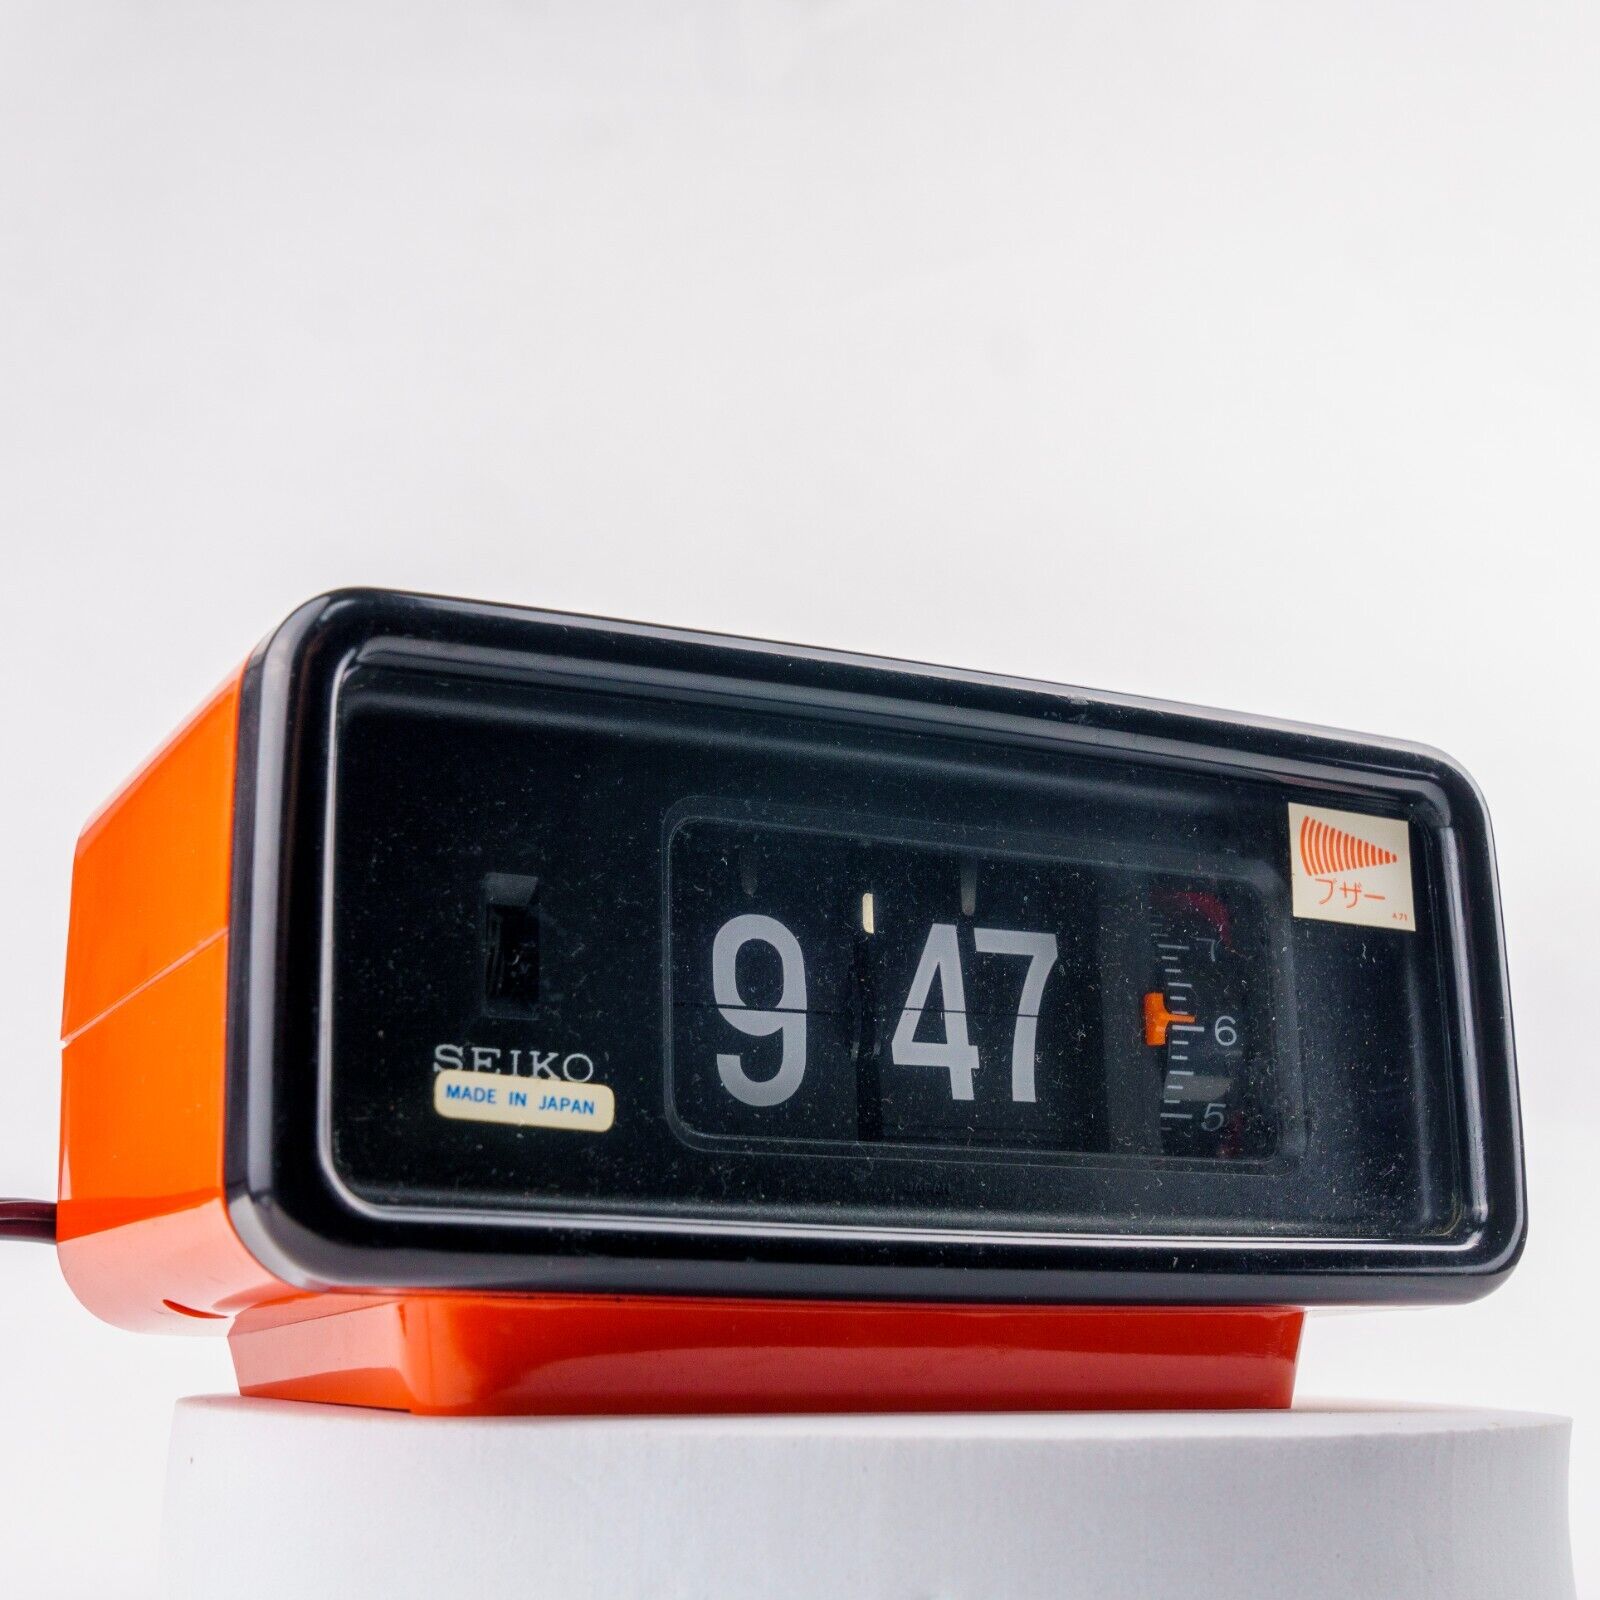 SE|KO Flip Clock Alarm DP692T Red Body Space age Vintage Excellent+5 #1173